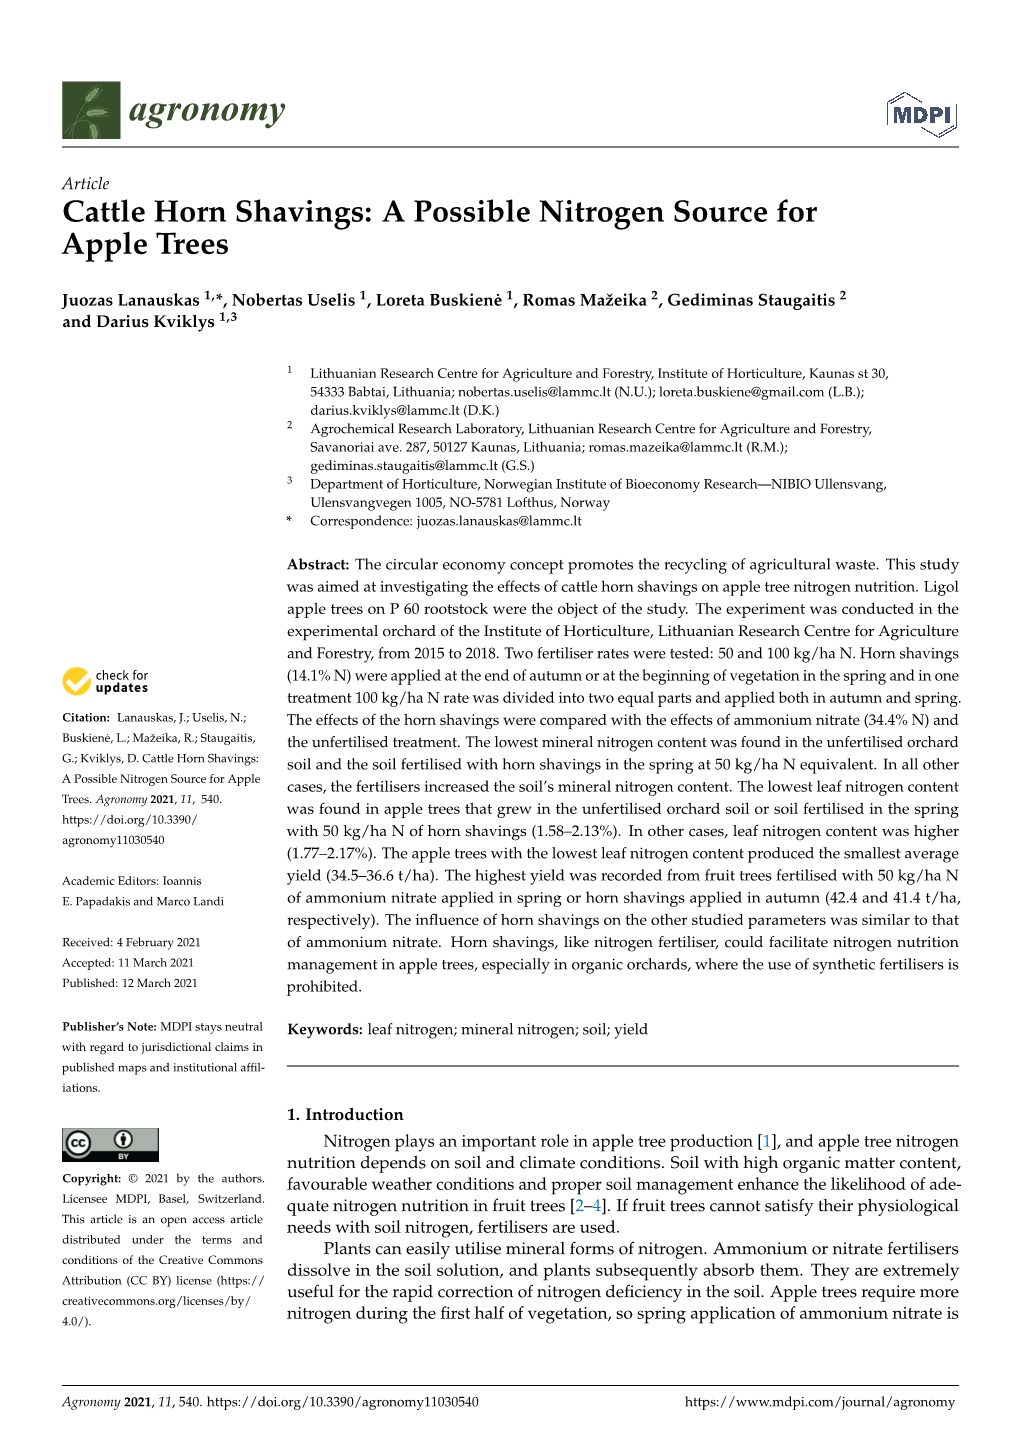 Cattle Horn Shavings: a Possible Nitrogen Source for Apple Trees